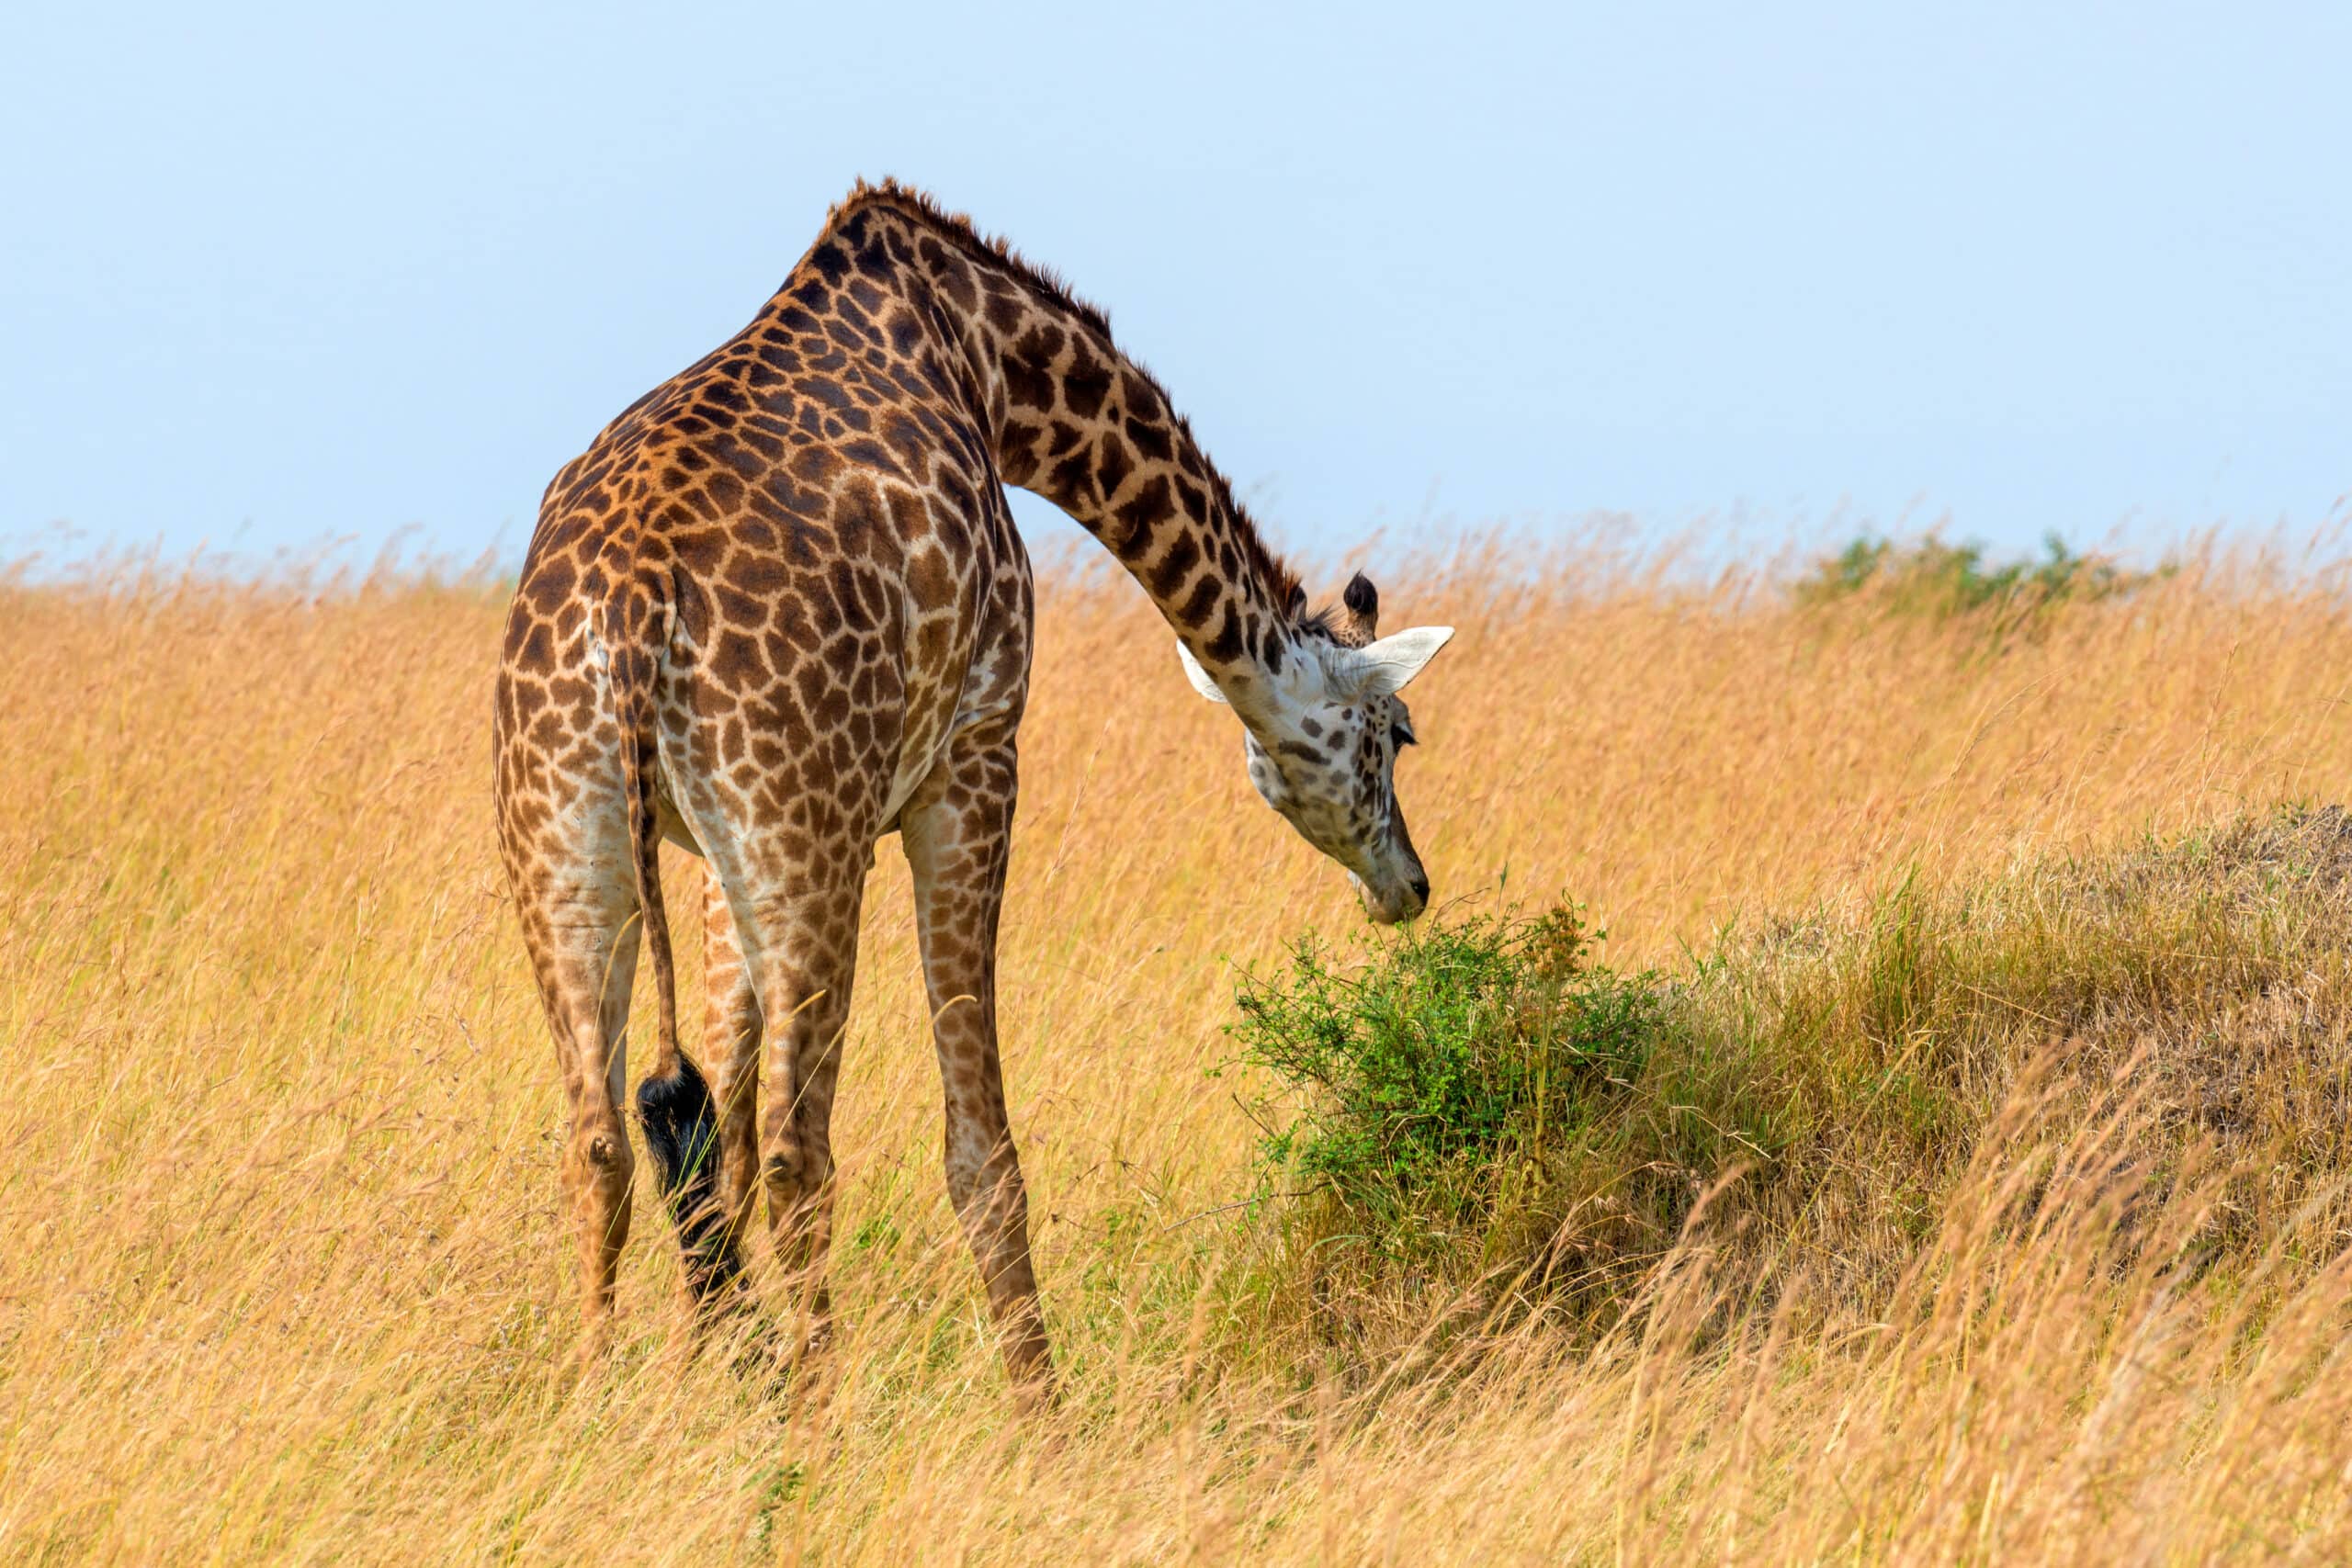 giraffe in national park of kenya 2021 08 26 15 56 04 utc scaled